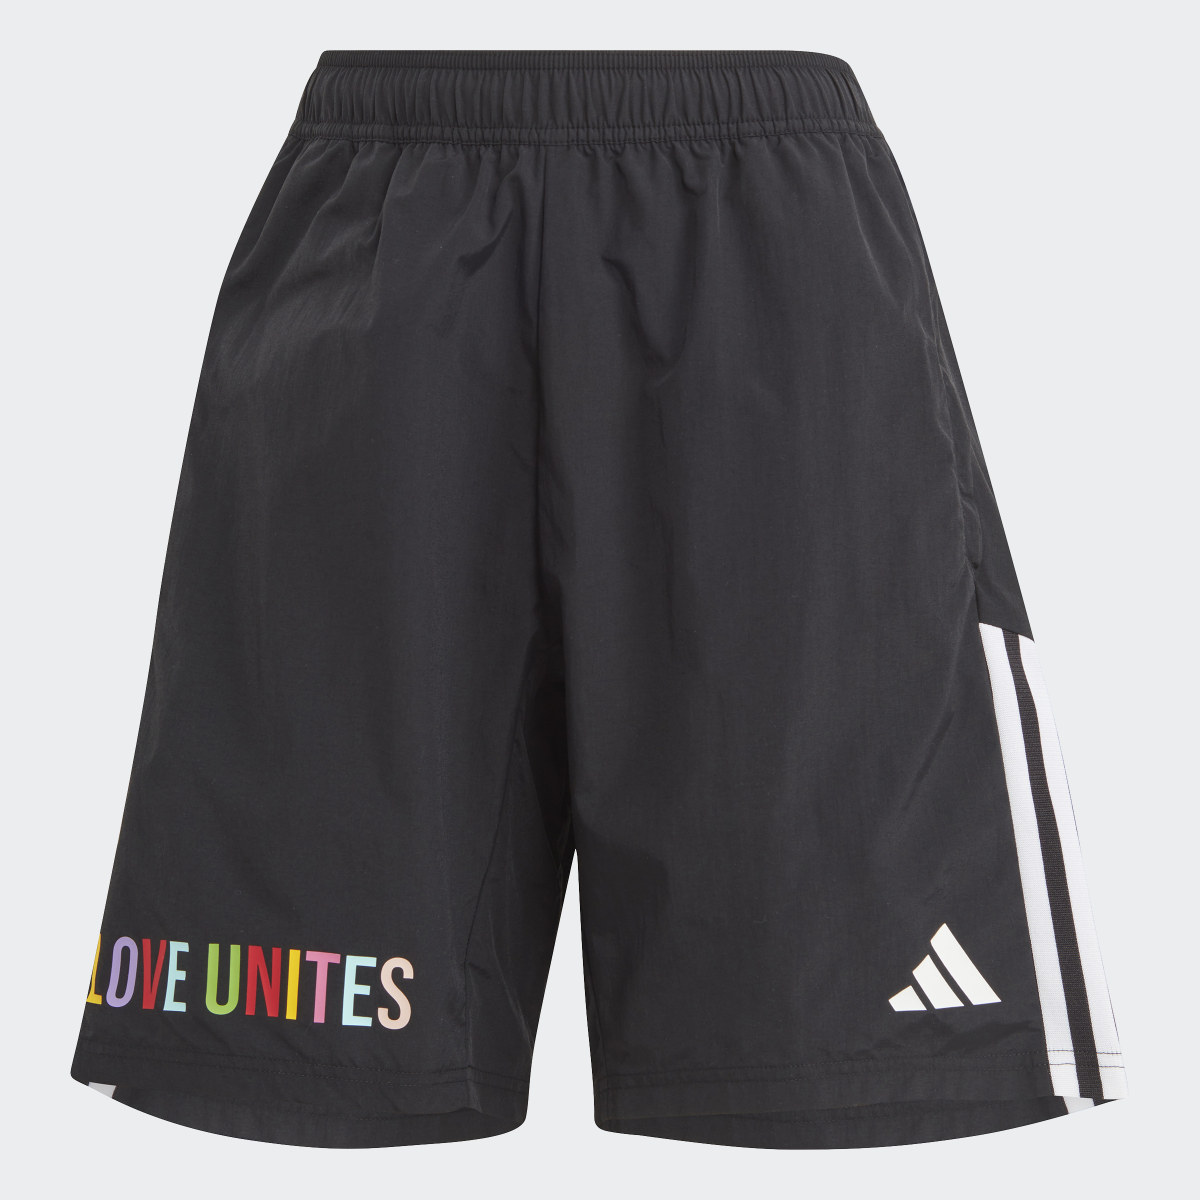 Adidas Pride Tiro Downtime Shorts. 4